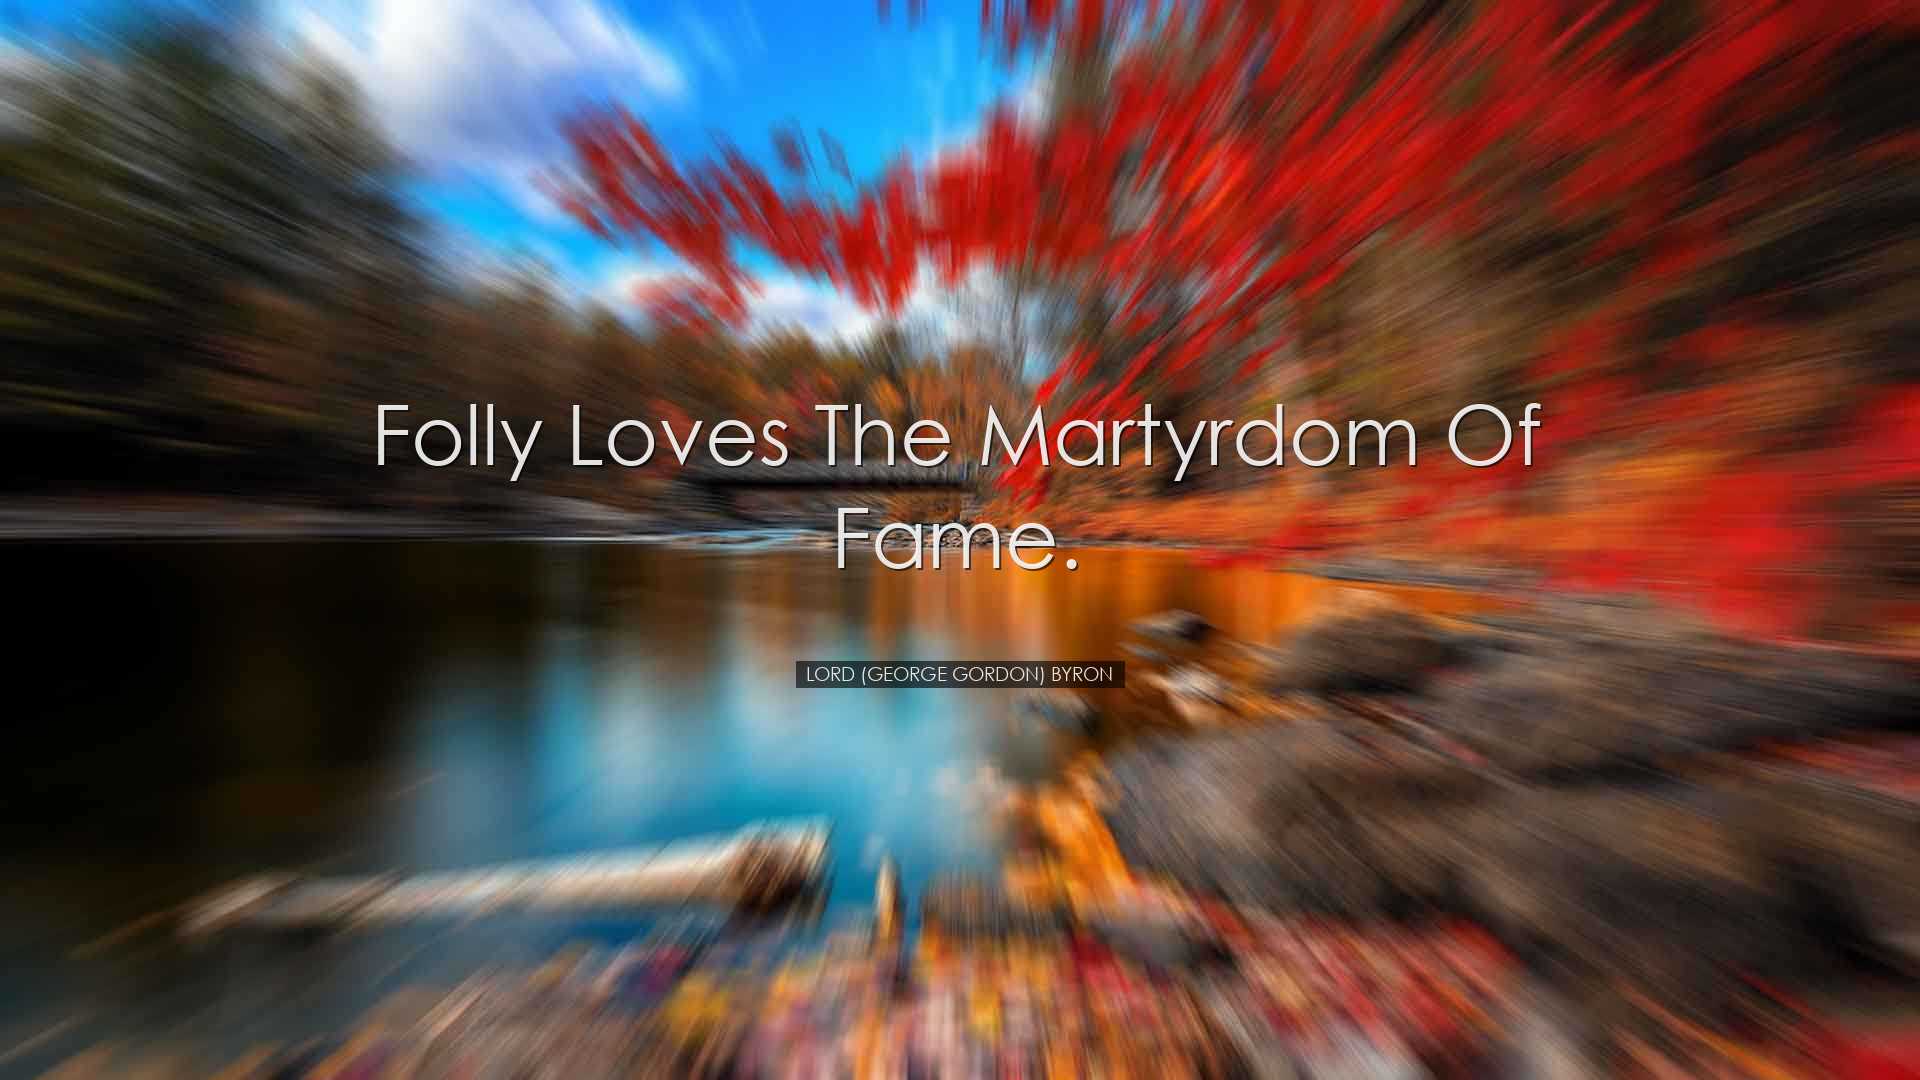 Folly loves the martyrdom of fame. - Lord (George Gordon) Byron